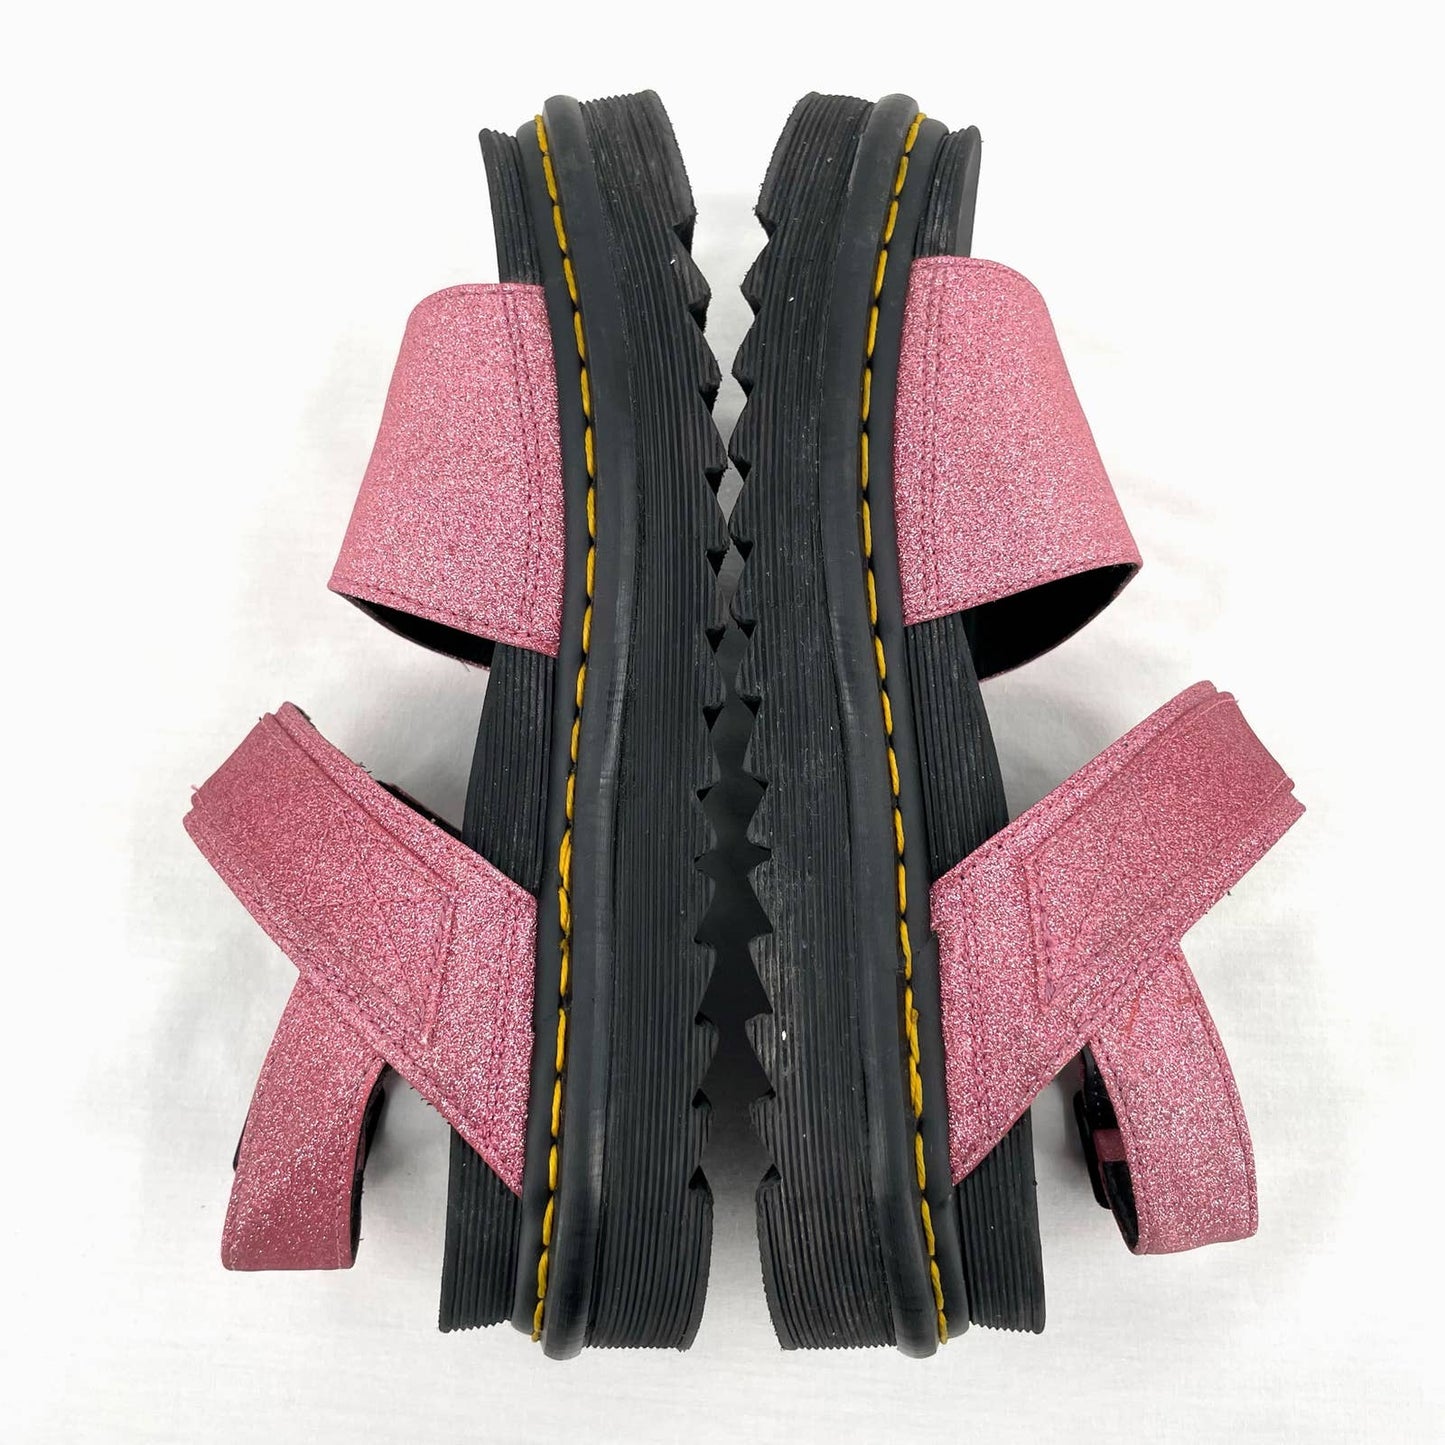 Dr. Martens Voss Sandals Pink Fine Glitter Chunky Sole Platform Buckle Straps Size 8